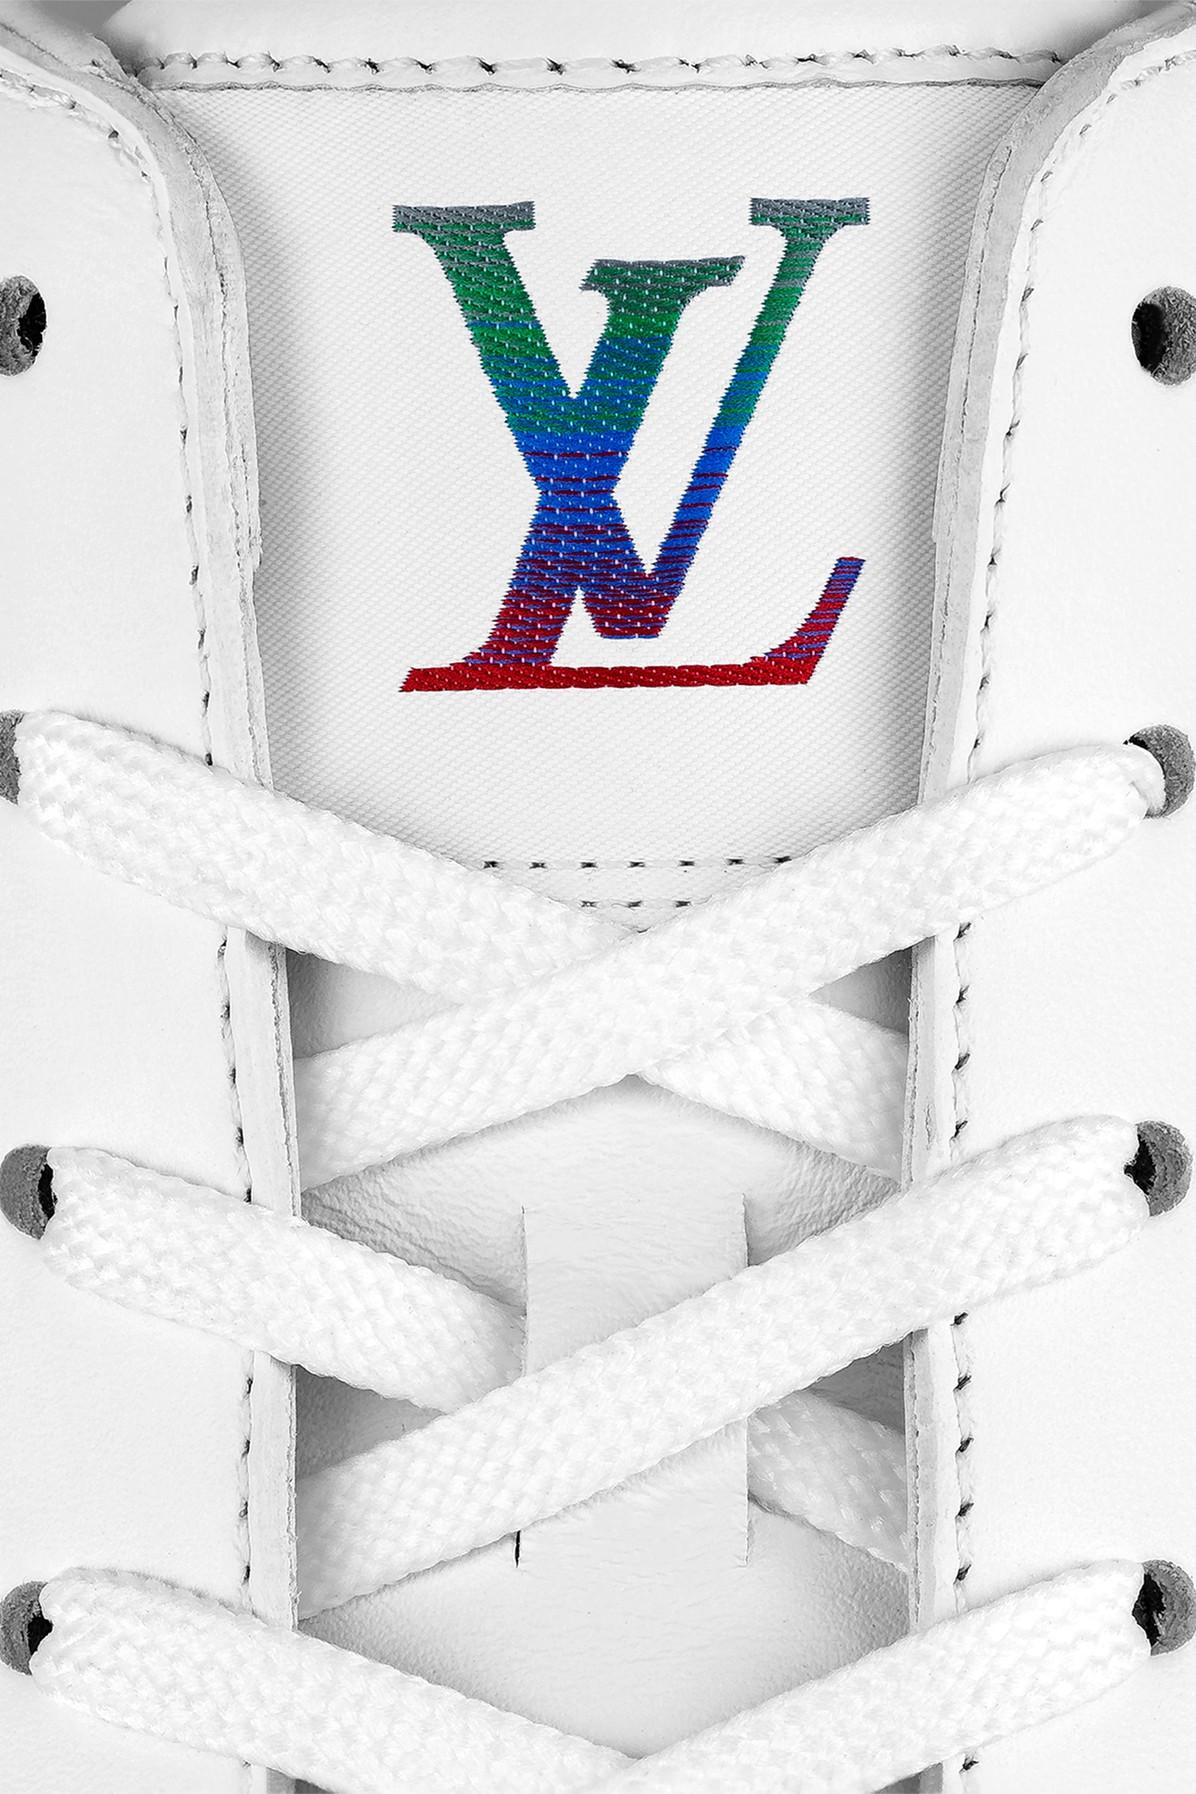 Louis Vuitton Men's White Canvas Tattoo Sneaker size 8 US / 7 LV